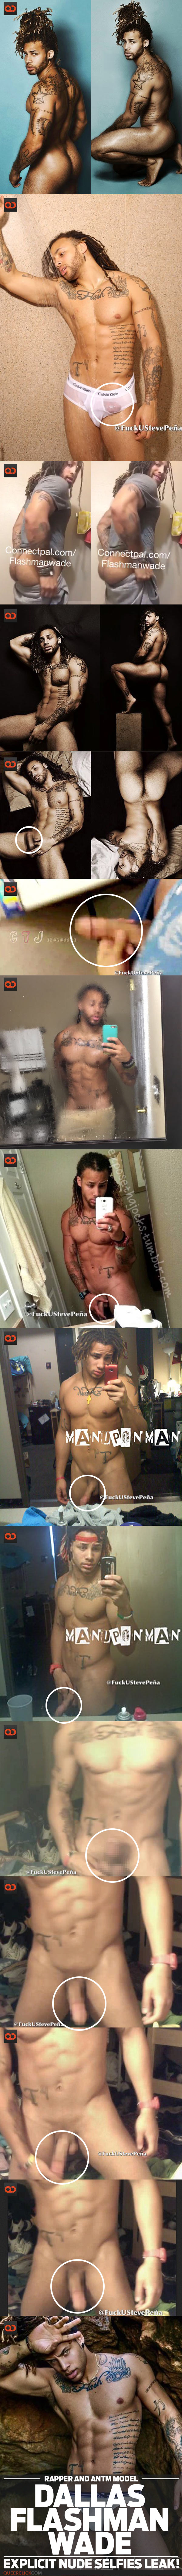 Dallas Flashman Wade, Rapper And ANTM Model, Explicit Nude Selfies Leak!